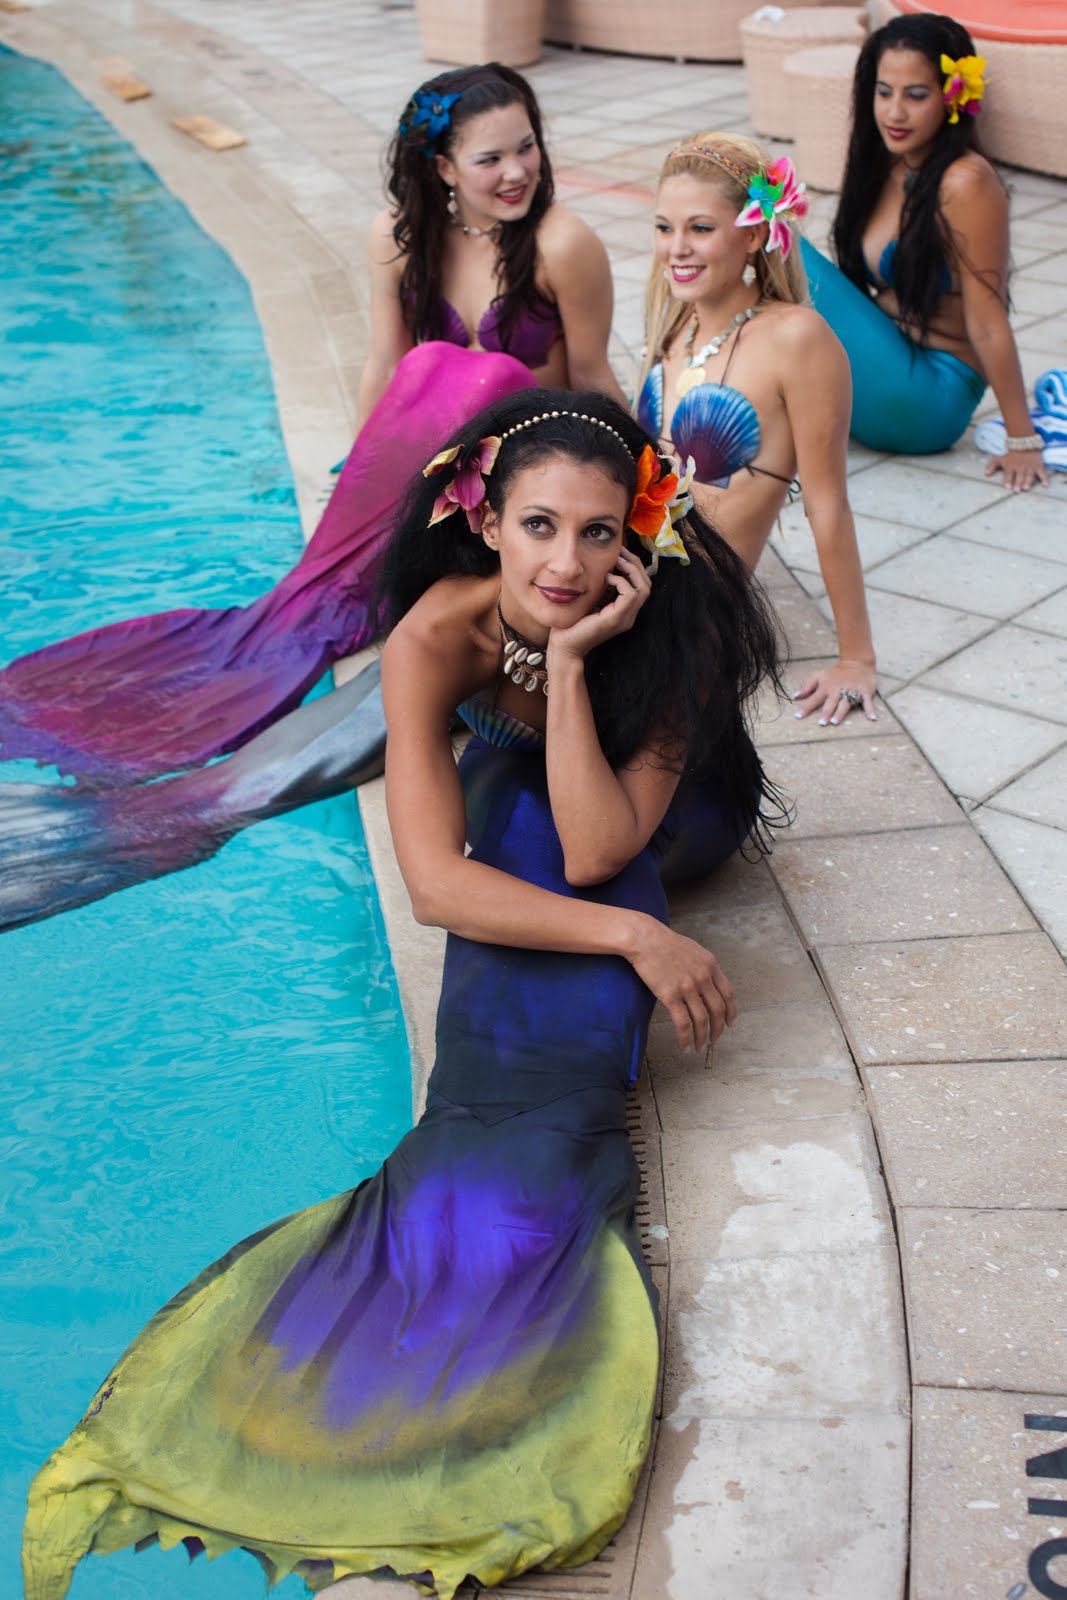 fragments: Mermaid Show at Wreck Bar, Ft Lauderdale